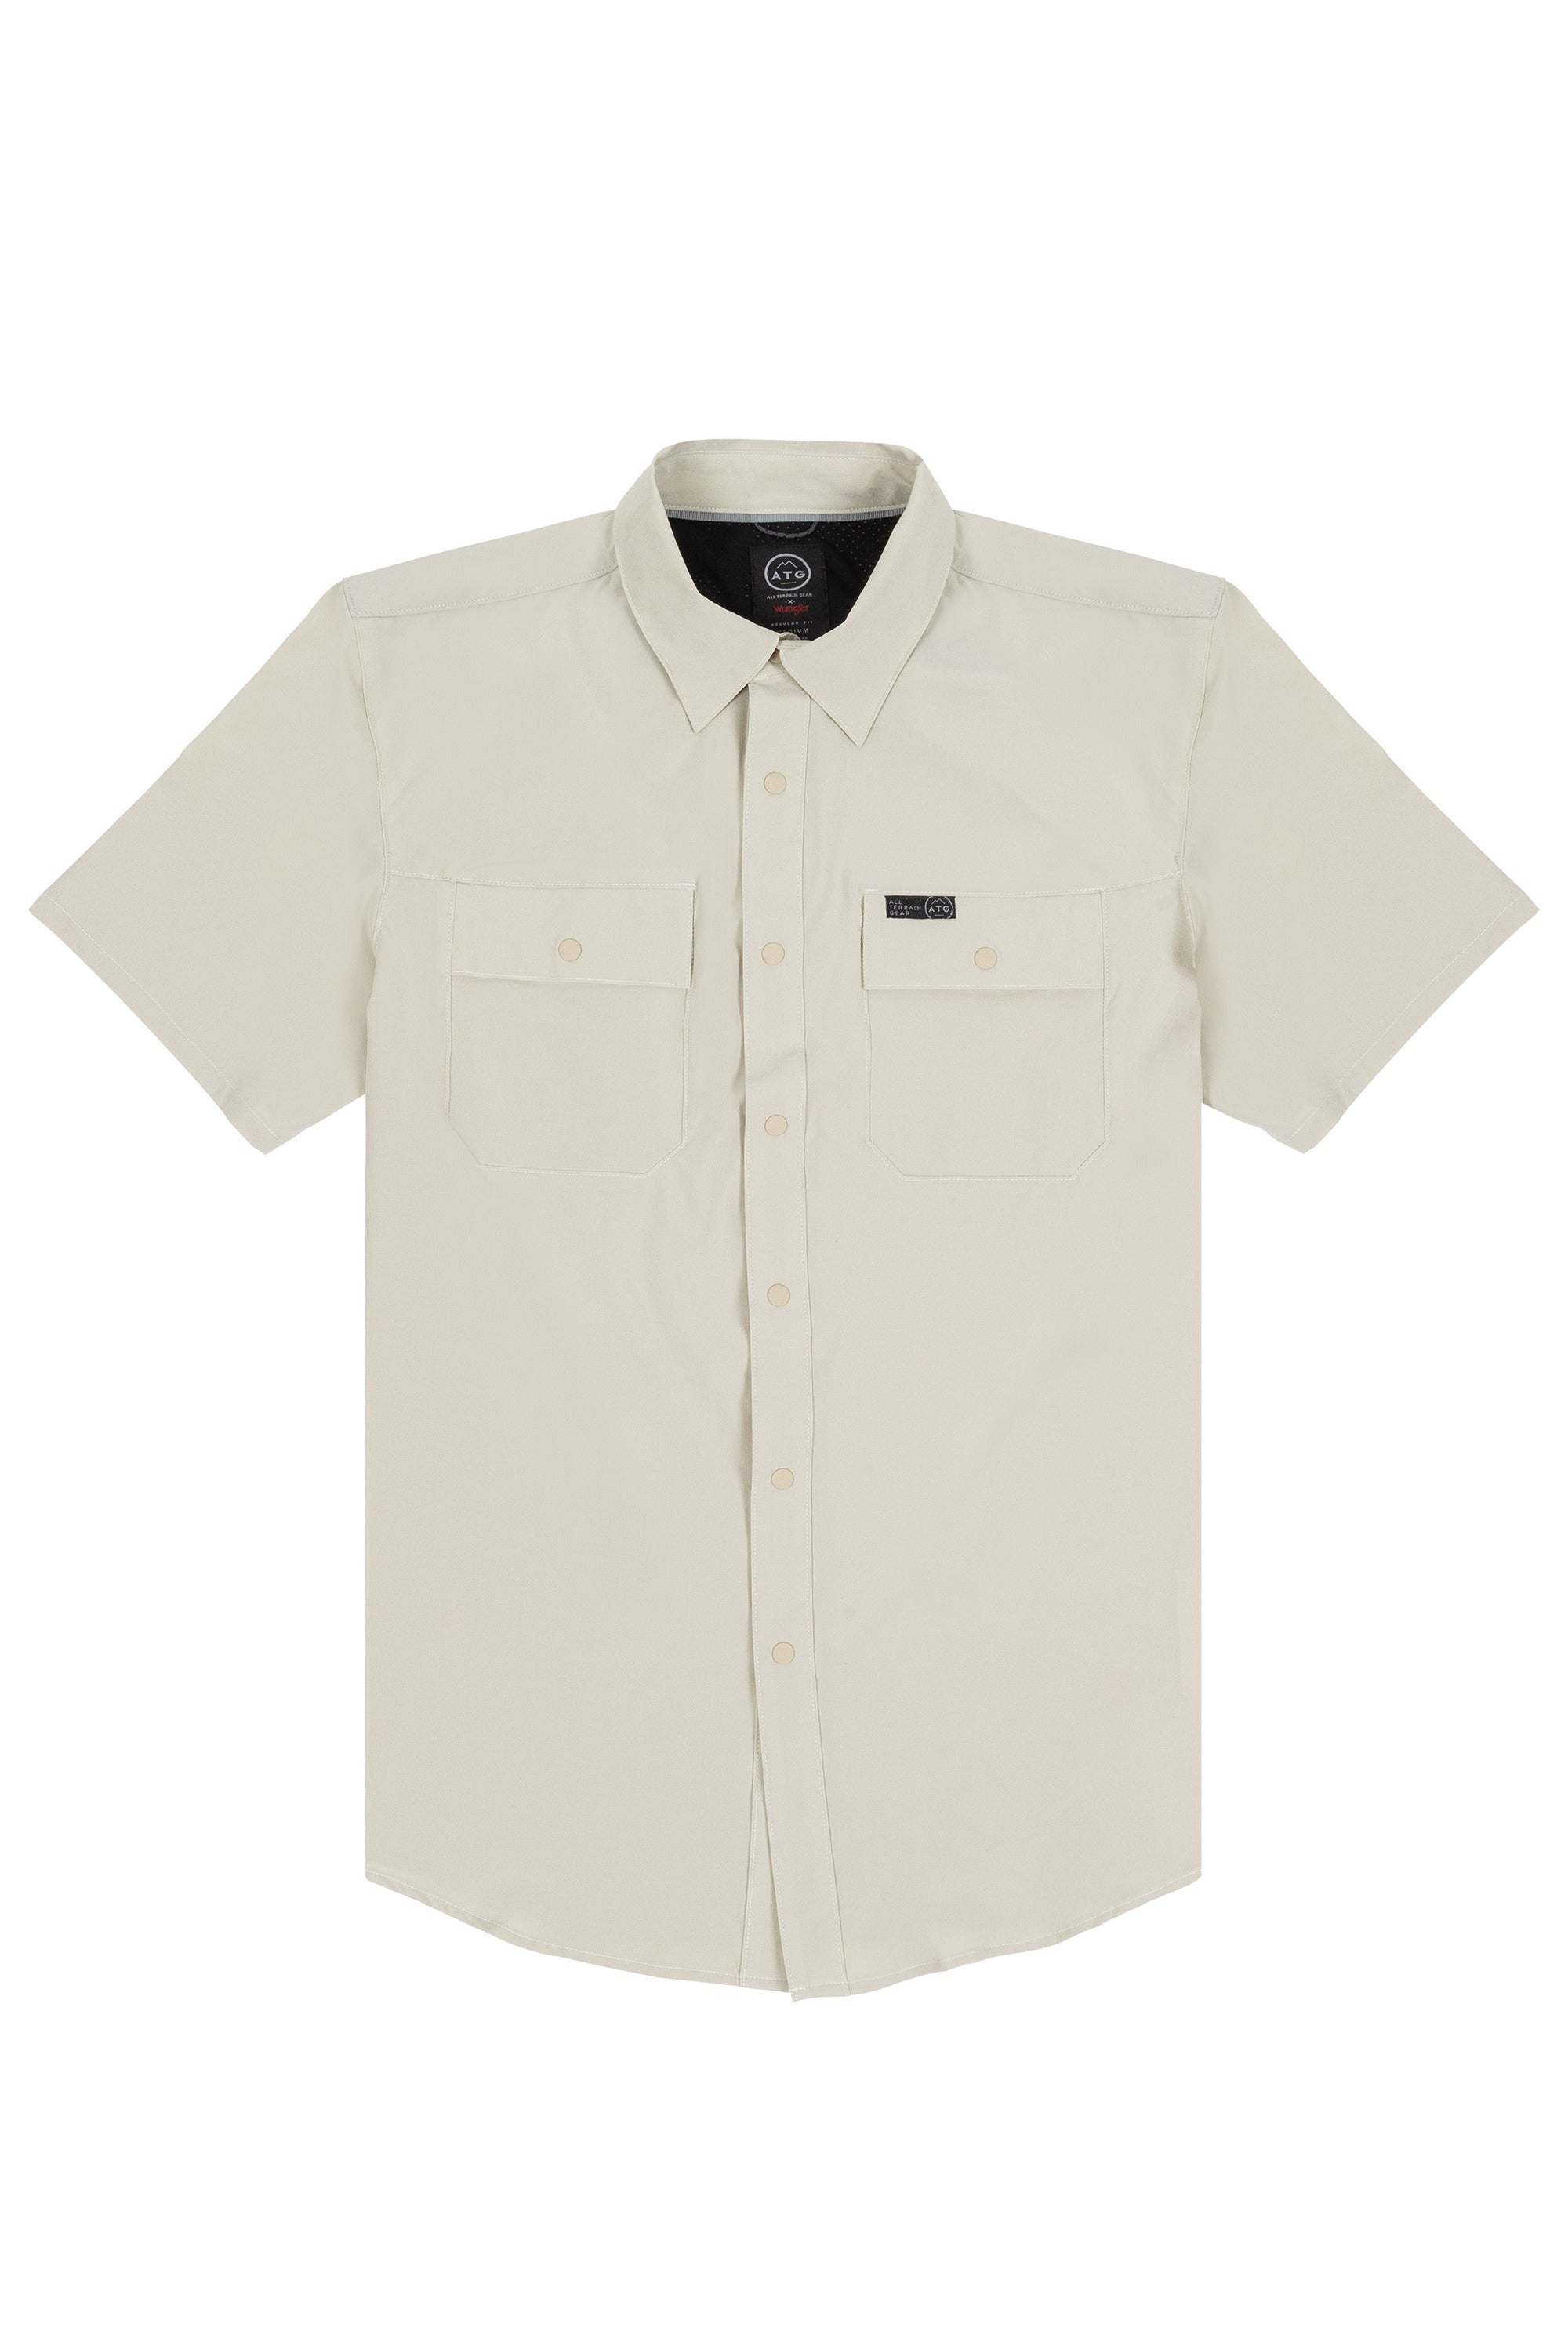 Kurzarm FWDS Shirt in Pelican Hemden Wrangler   